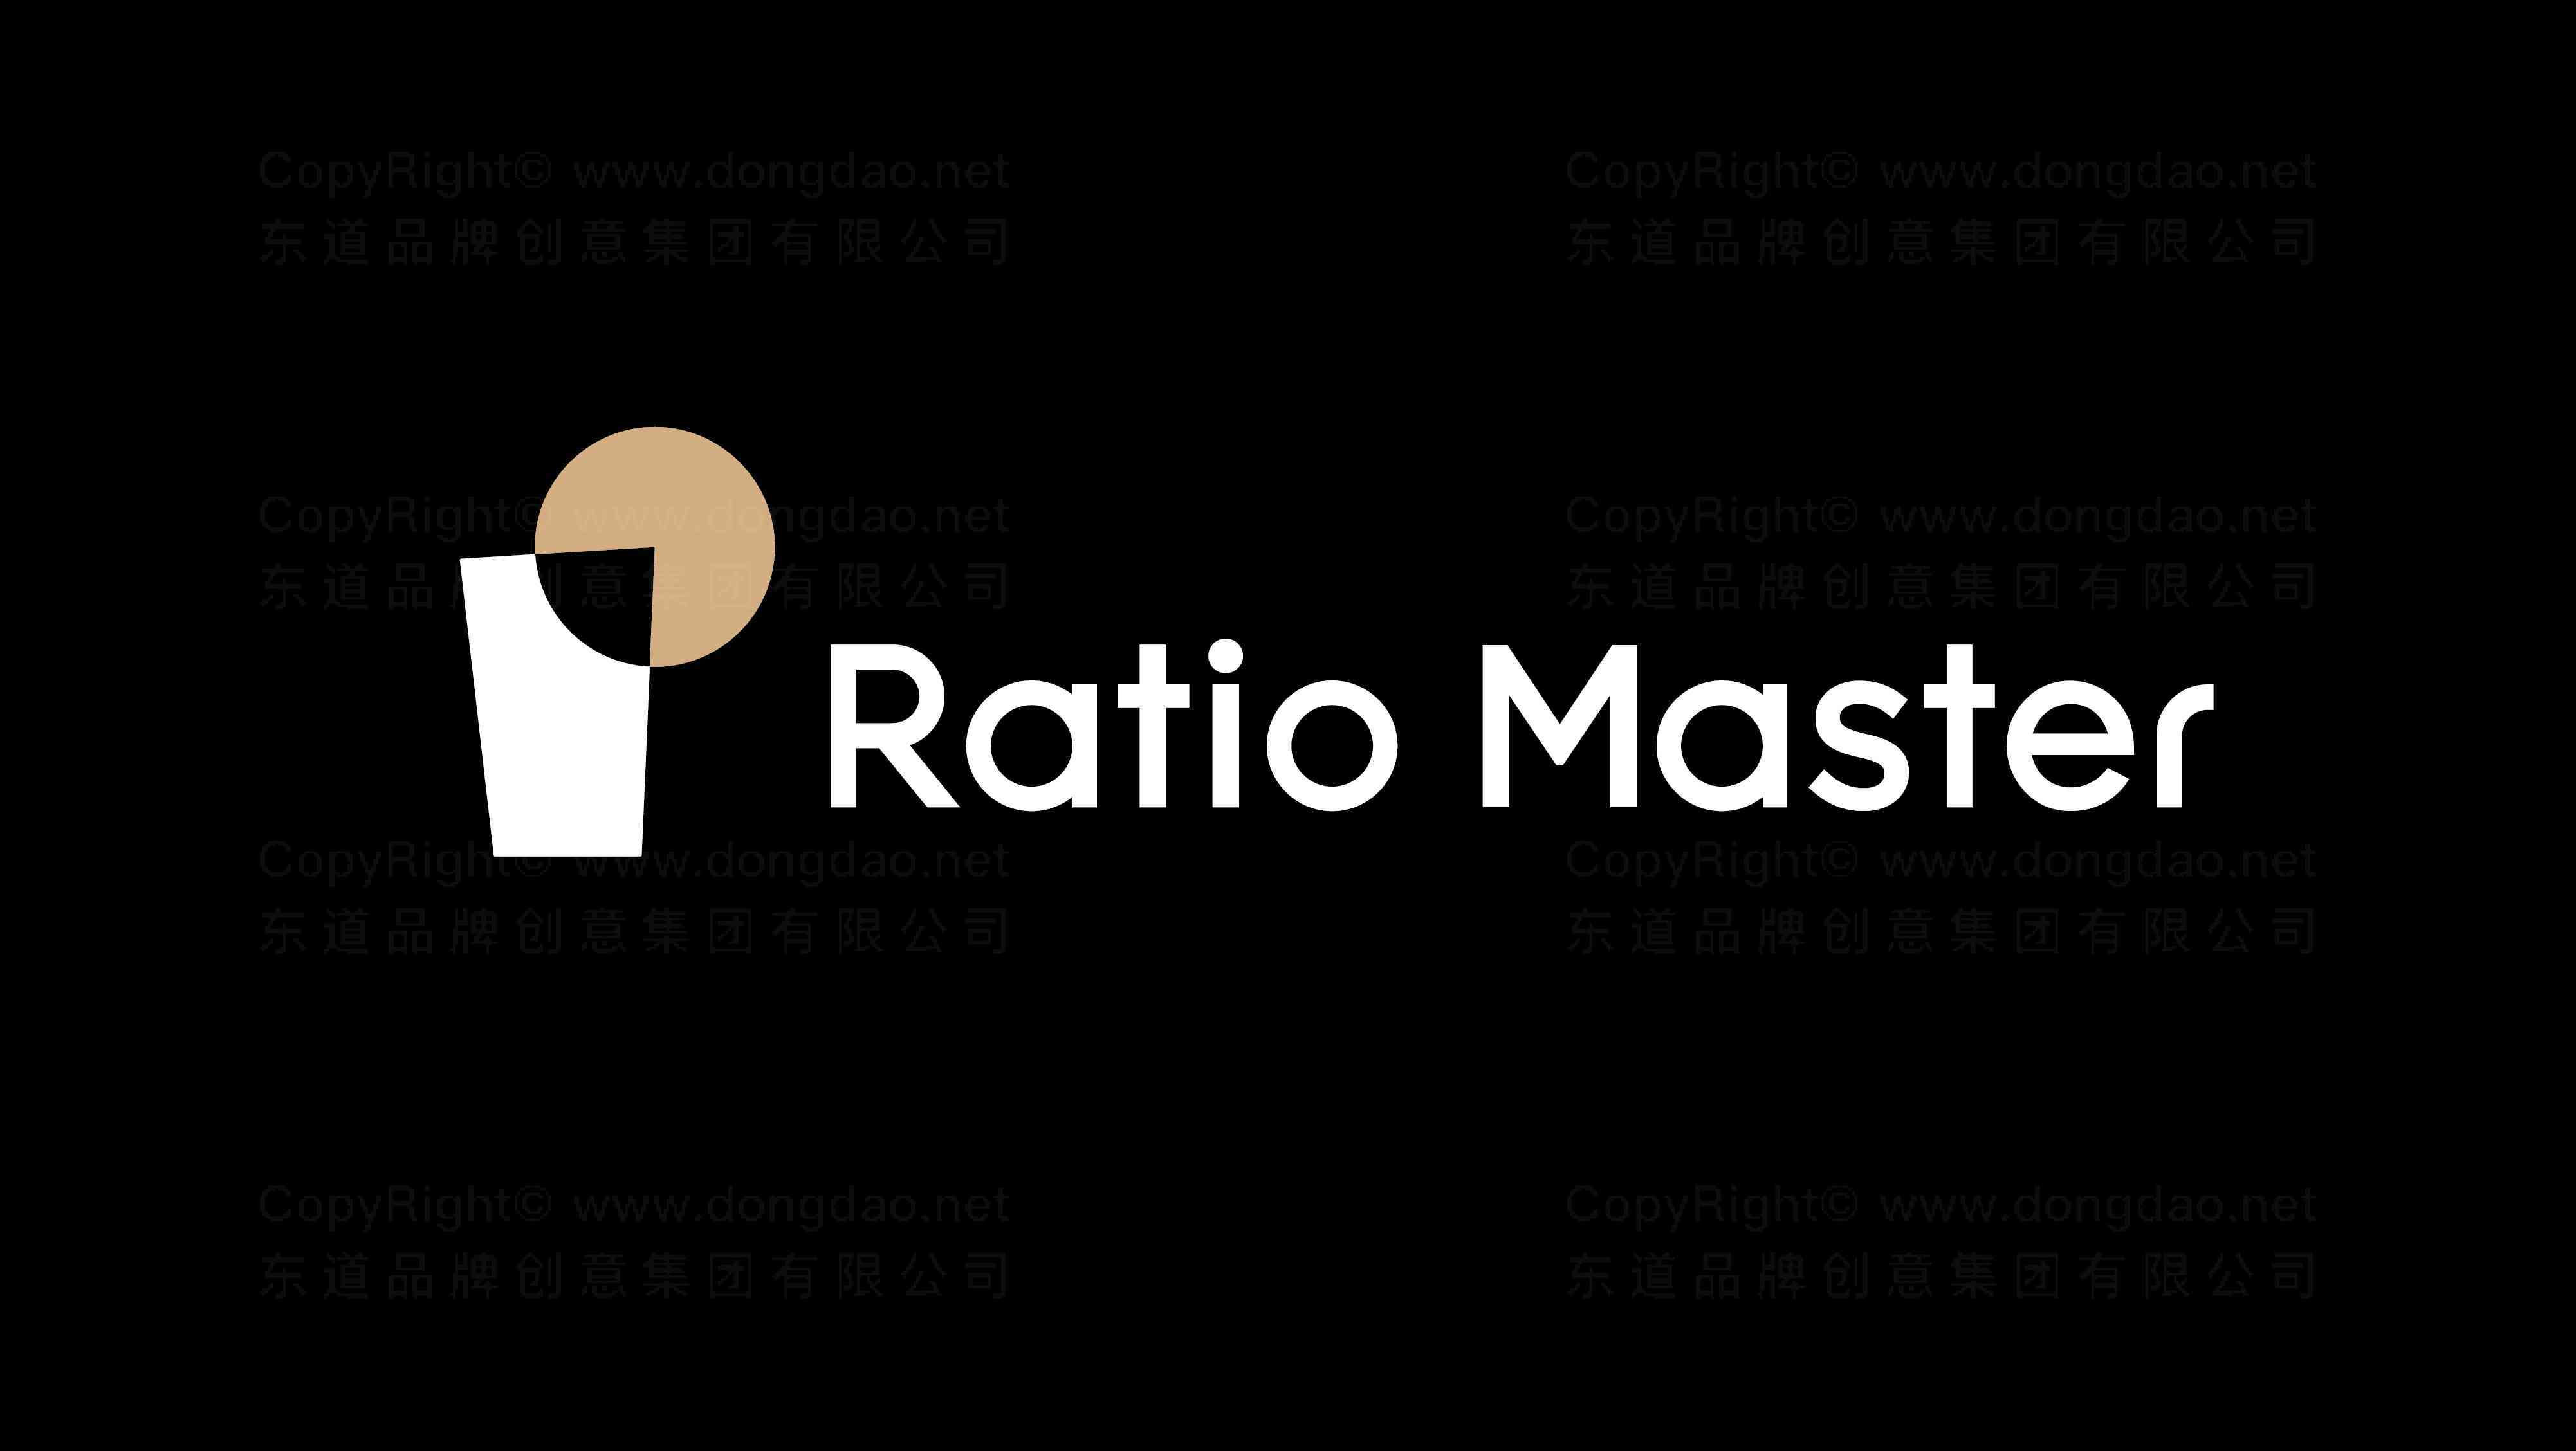 品比率大师（ Ratio Master）logo设计图片素材